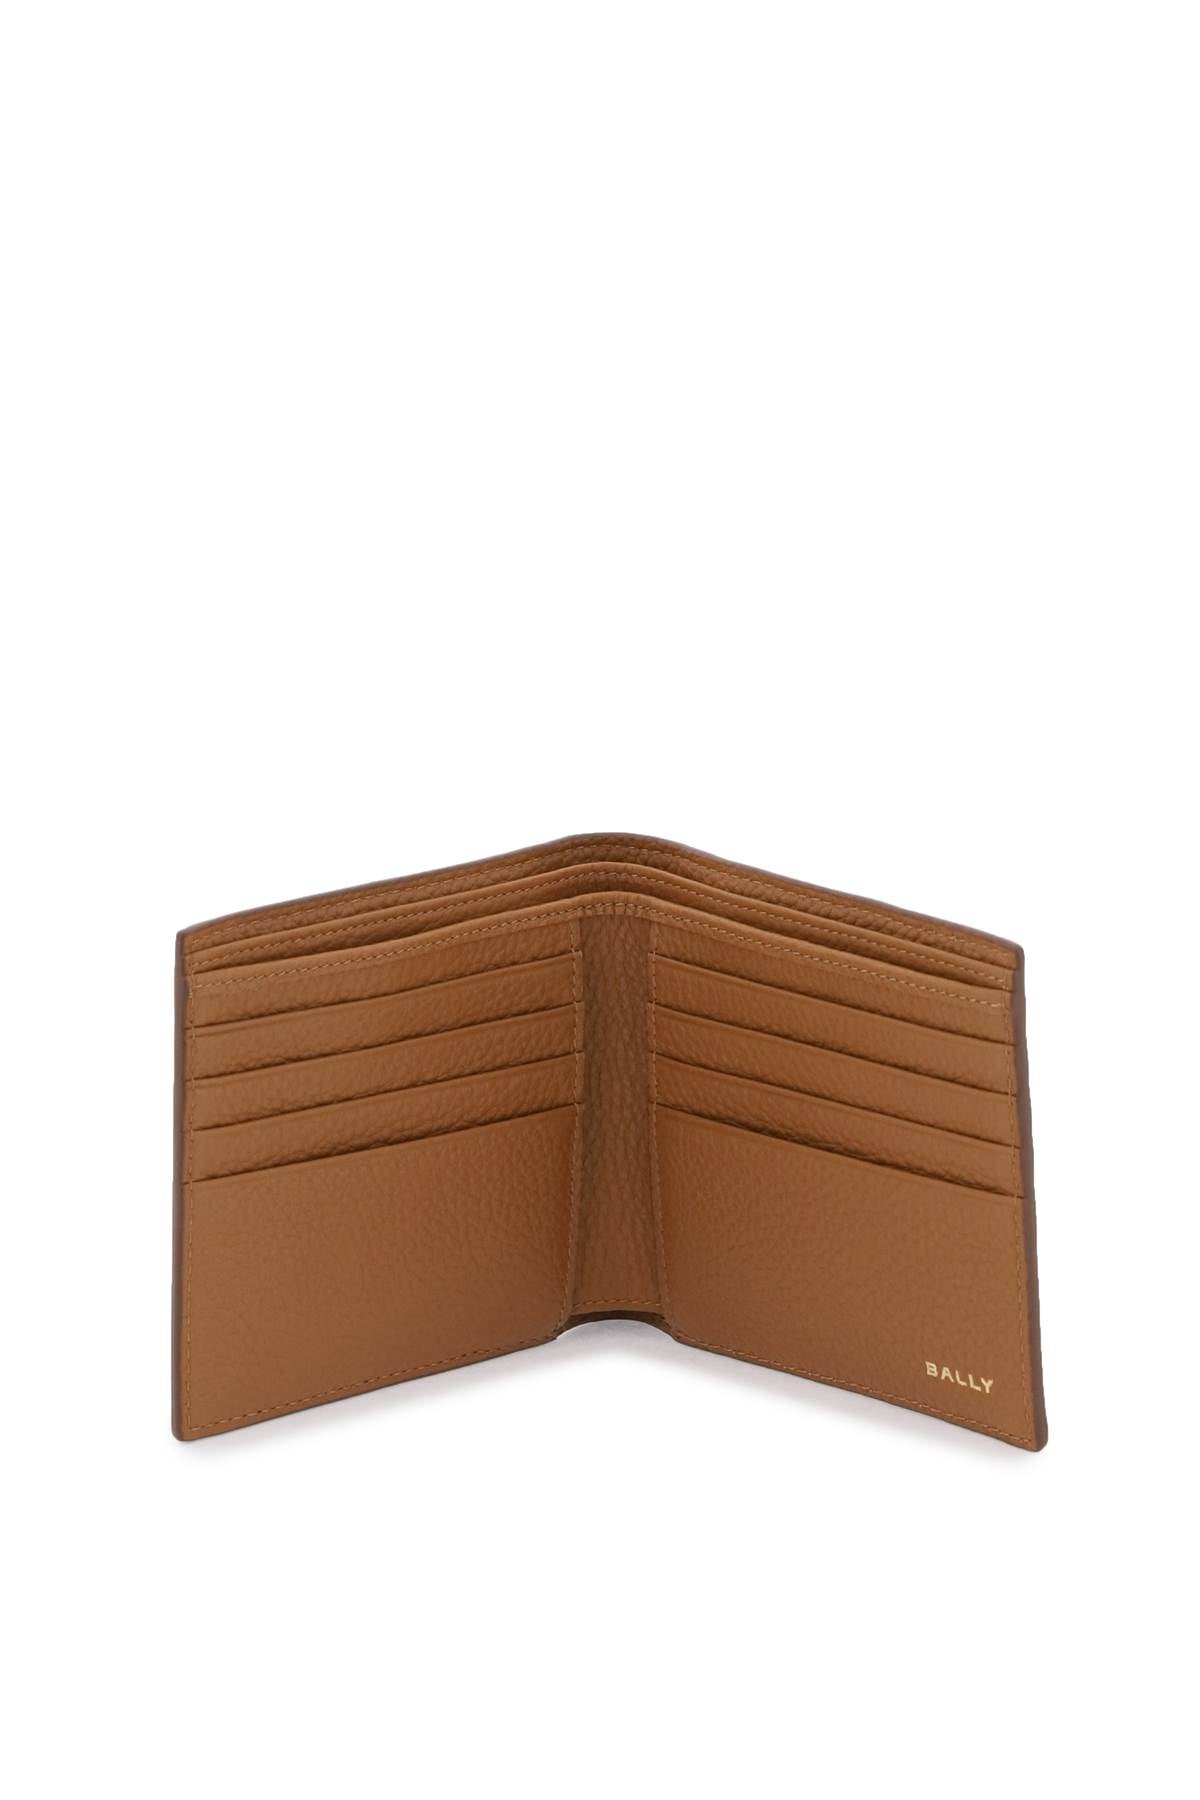 Bally pennant bi-fold wallet-1